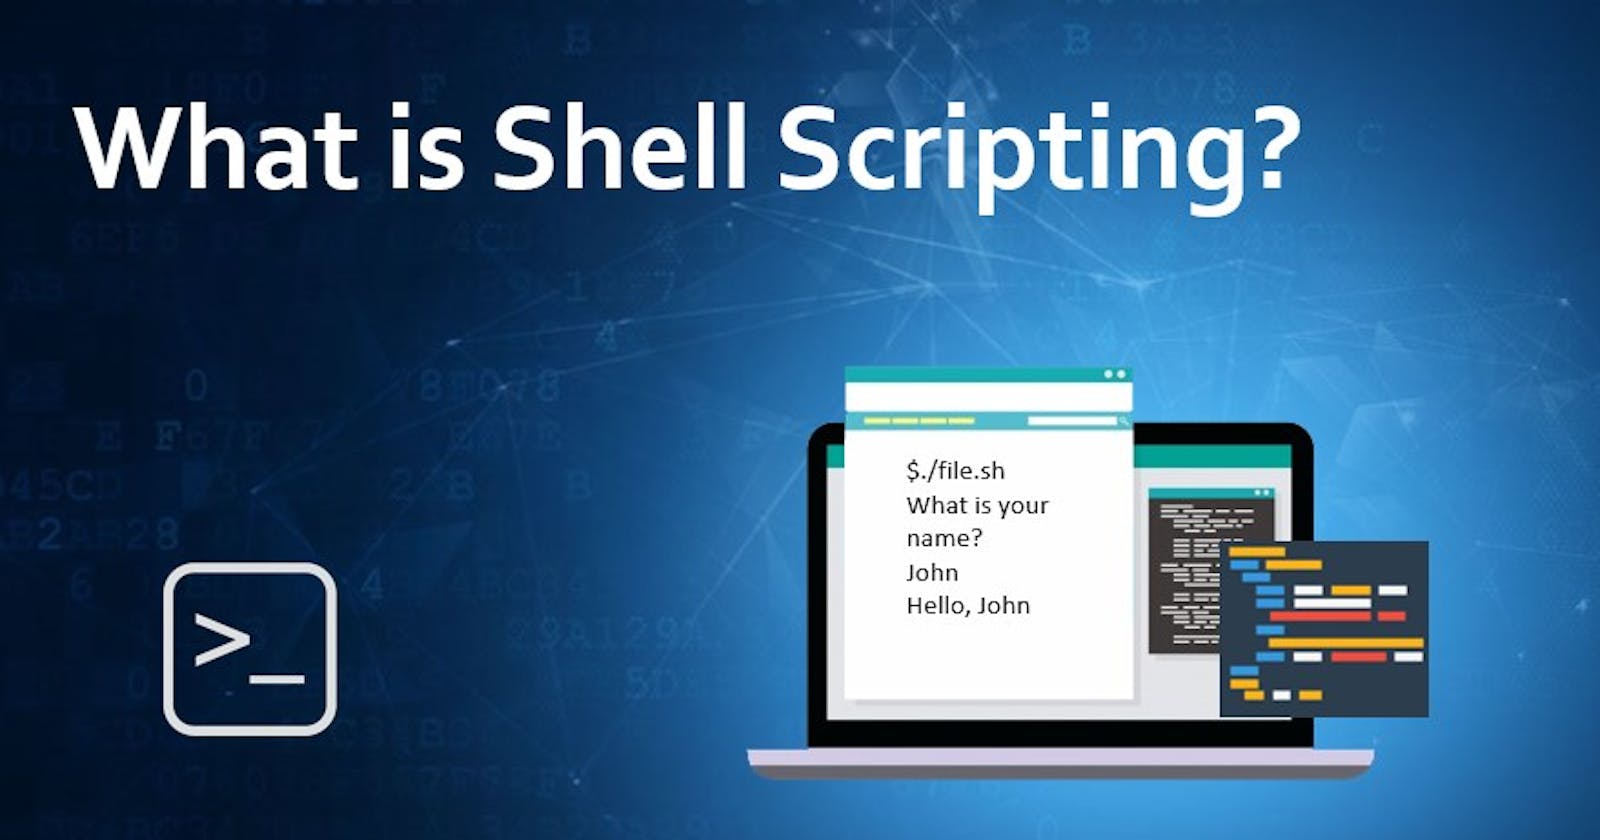 Day 4 task: Shell scripting